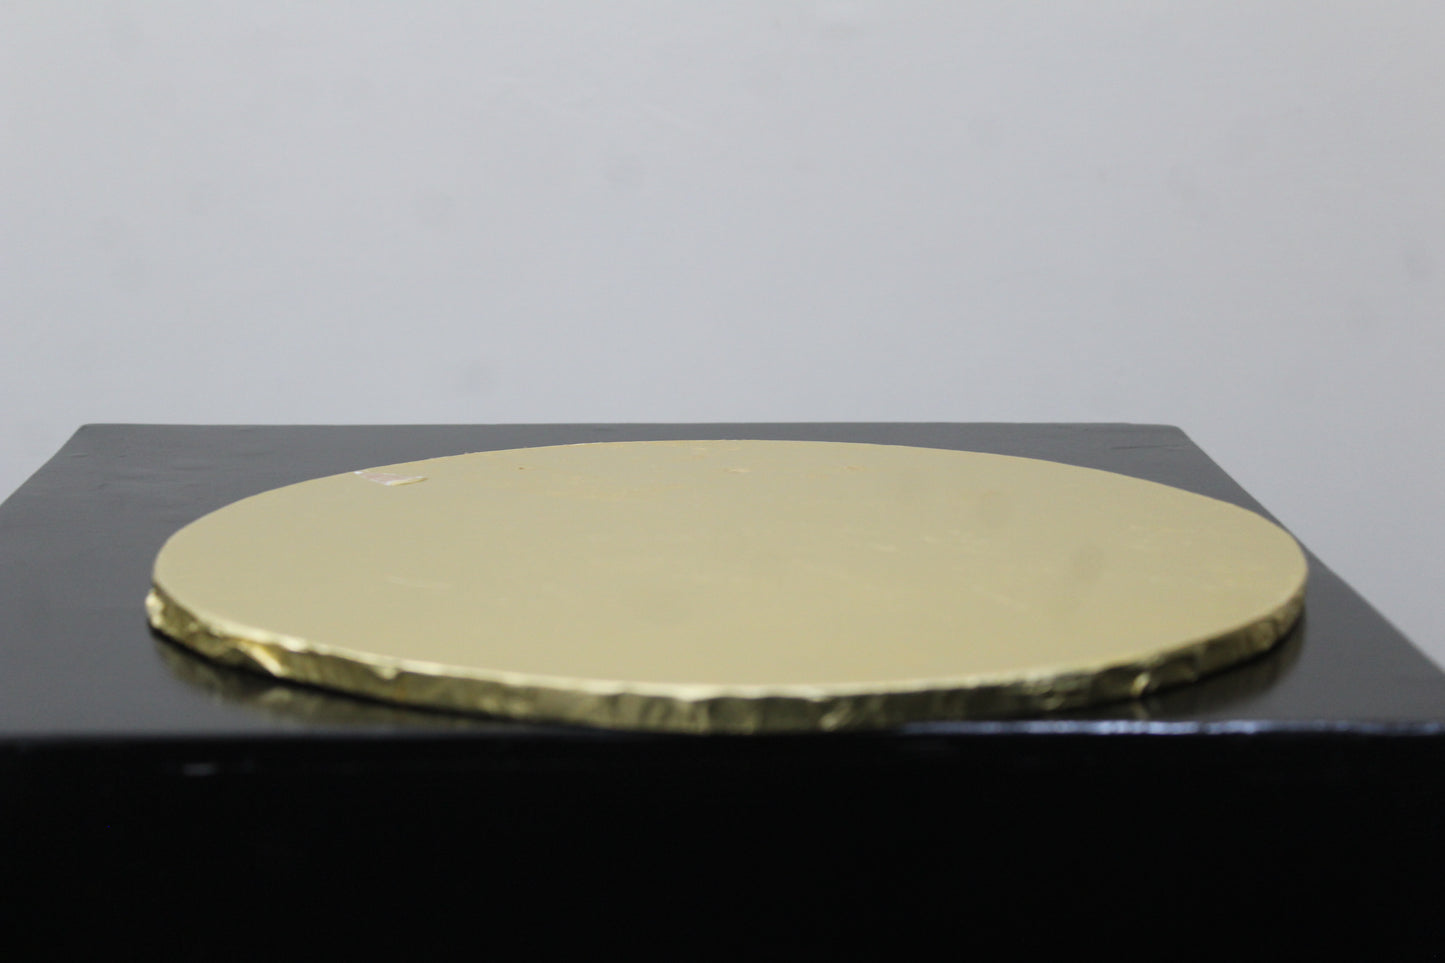 10 inch Cake Drum Board - White/Black/Golden/Silver